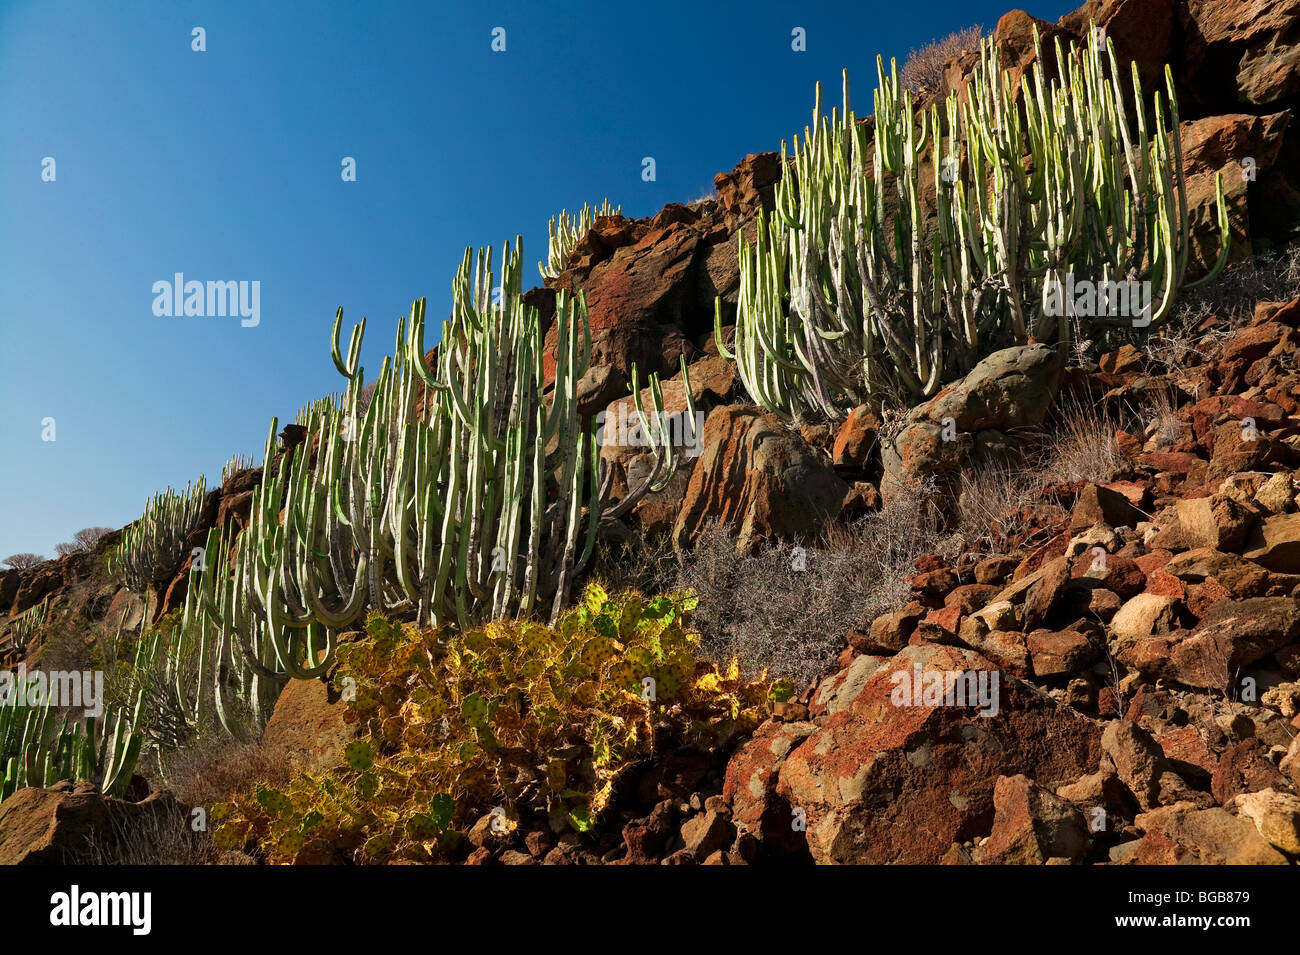 CACTUS PLANTS, TENERIFE ISLAND, CANARIES Stock Photo